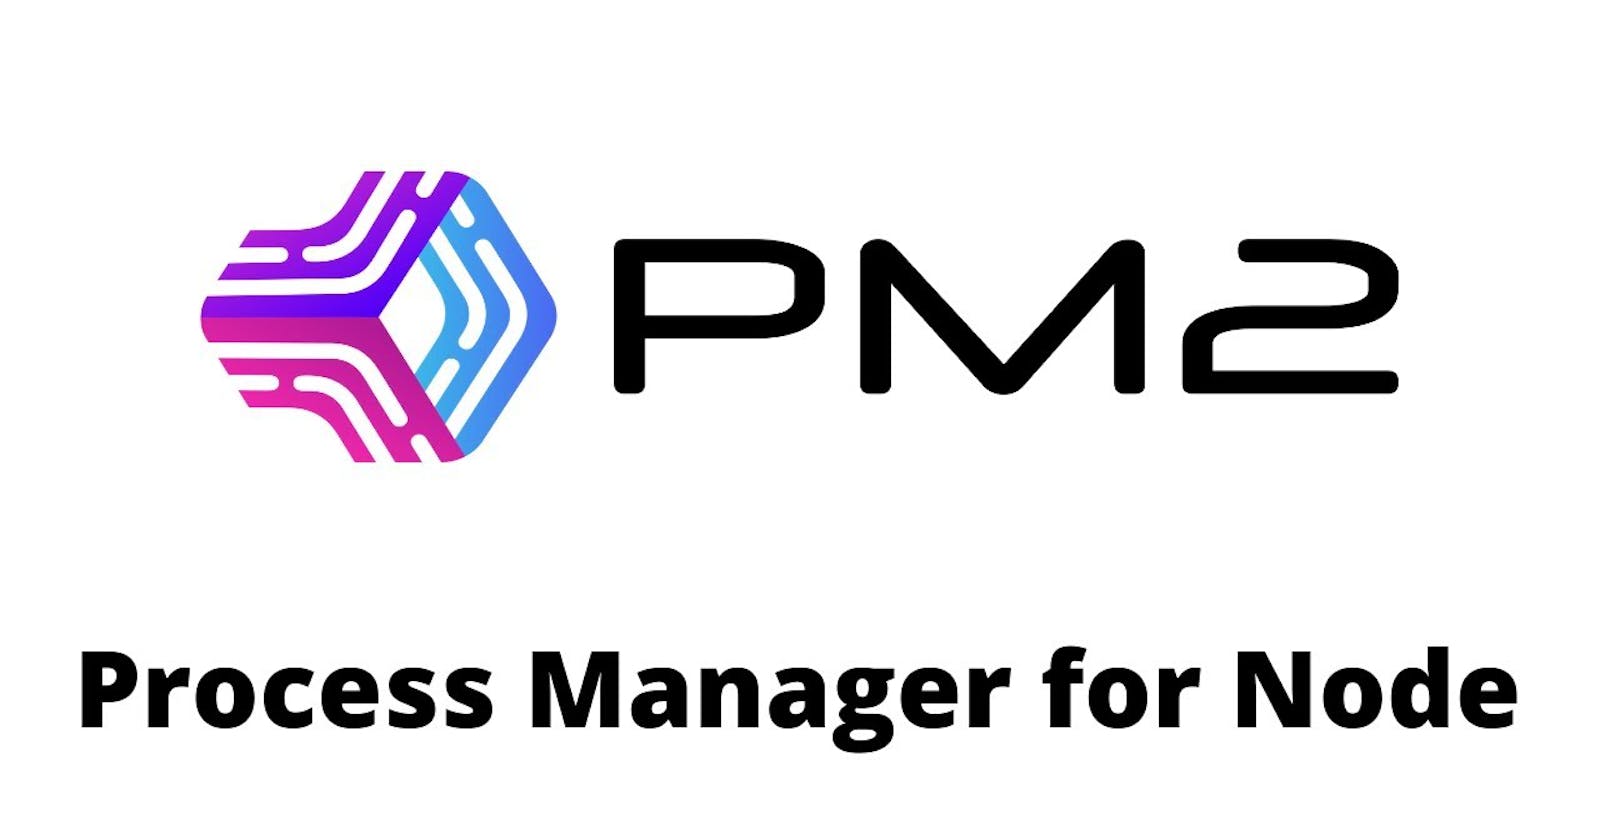 Pm2 Node Process Manager